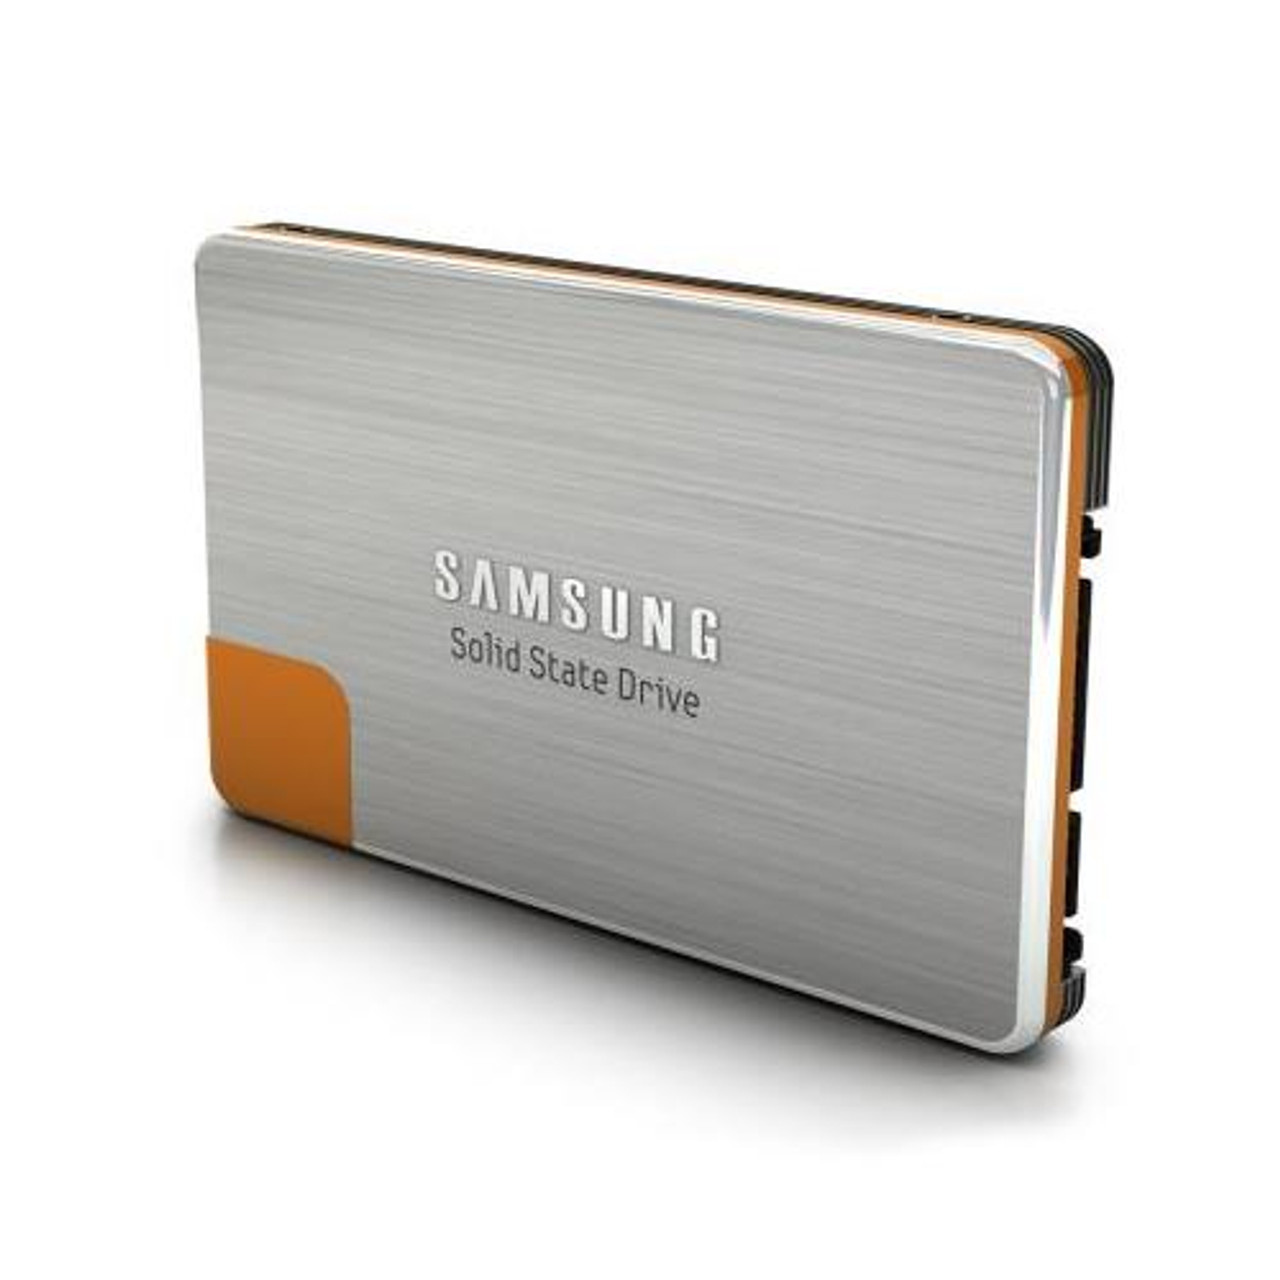 MMCQE28G8MUP Samsung SATA 3.0 Gbps 128GB Solid State Drive